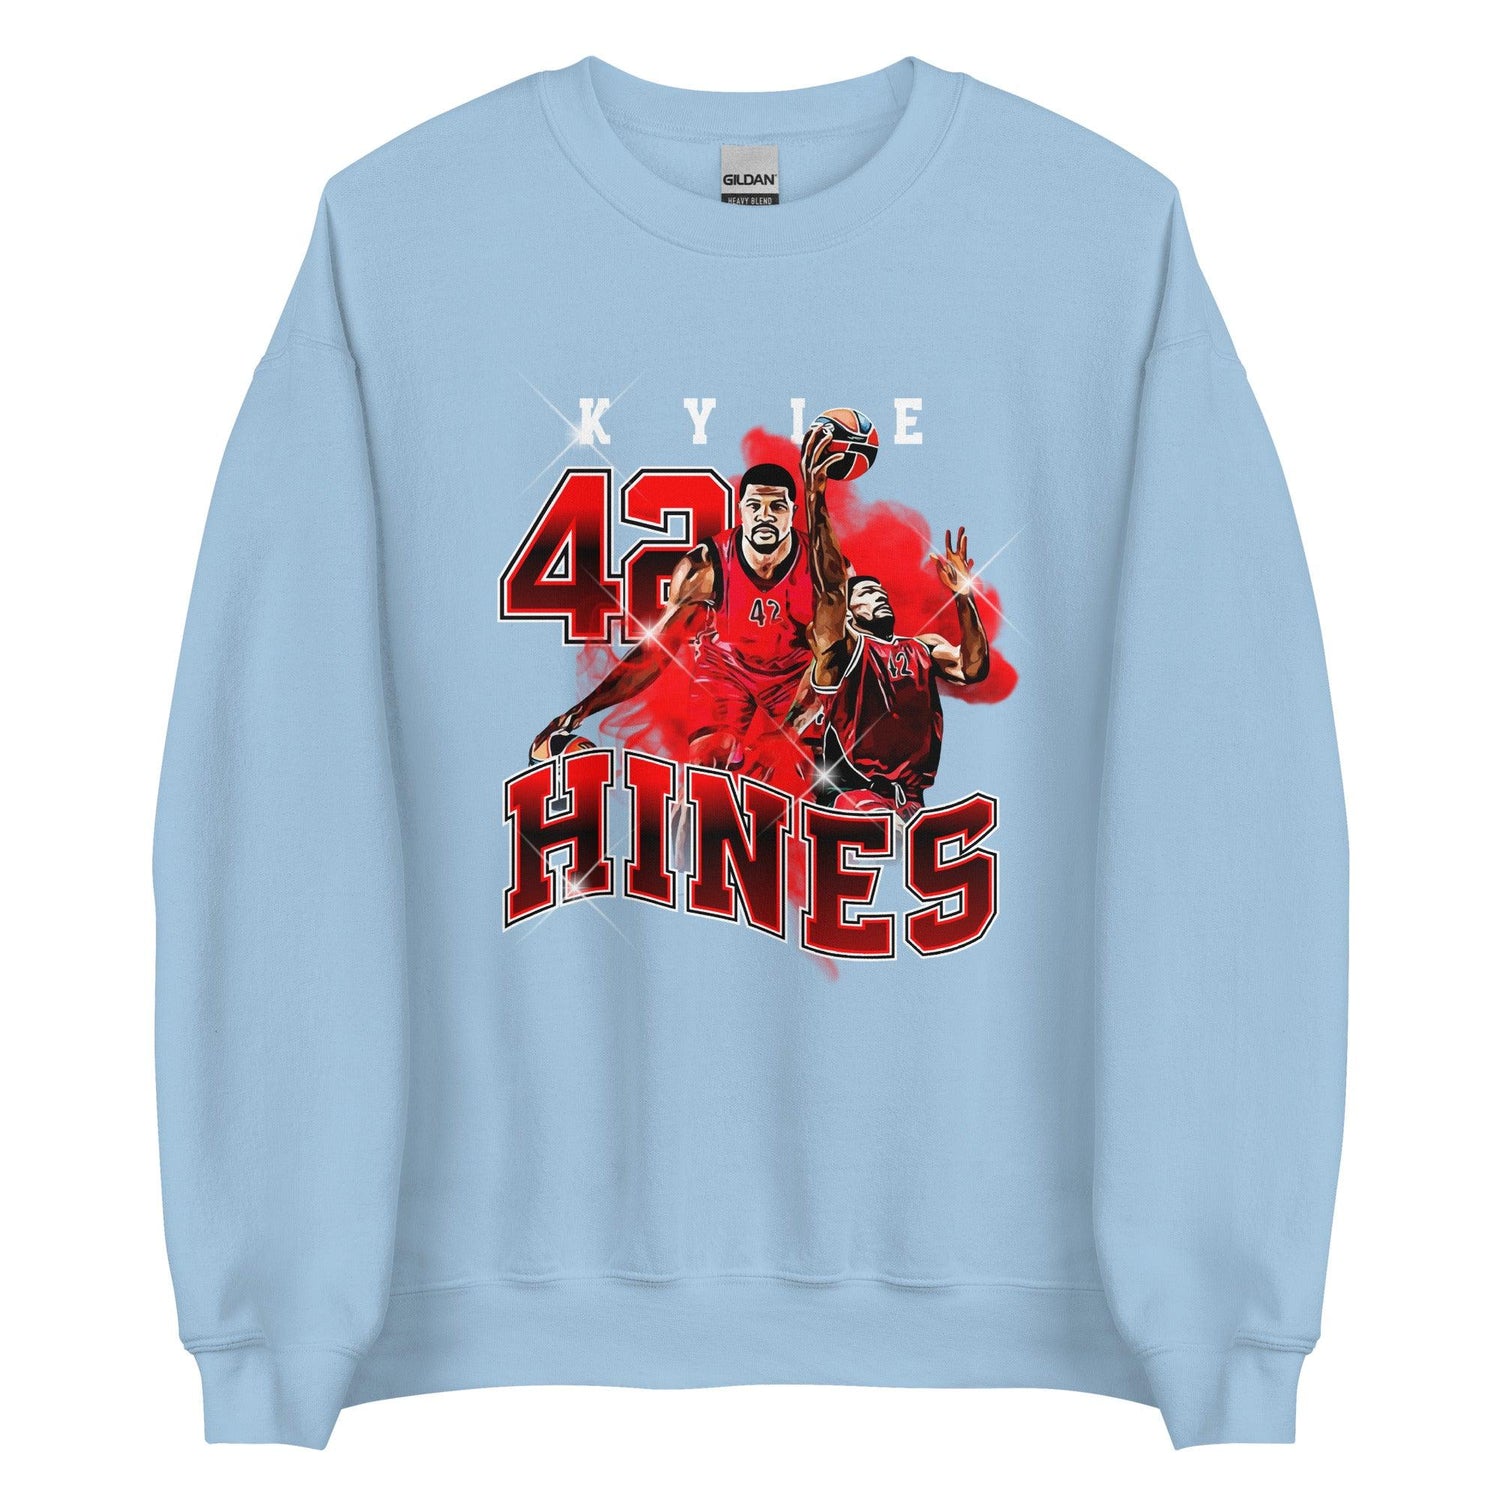 Kyle Hines "Career" Sweatshirt - Fan Arch